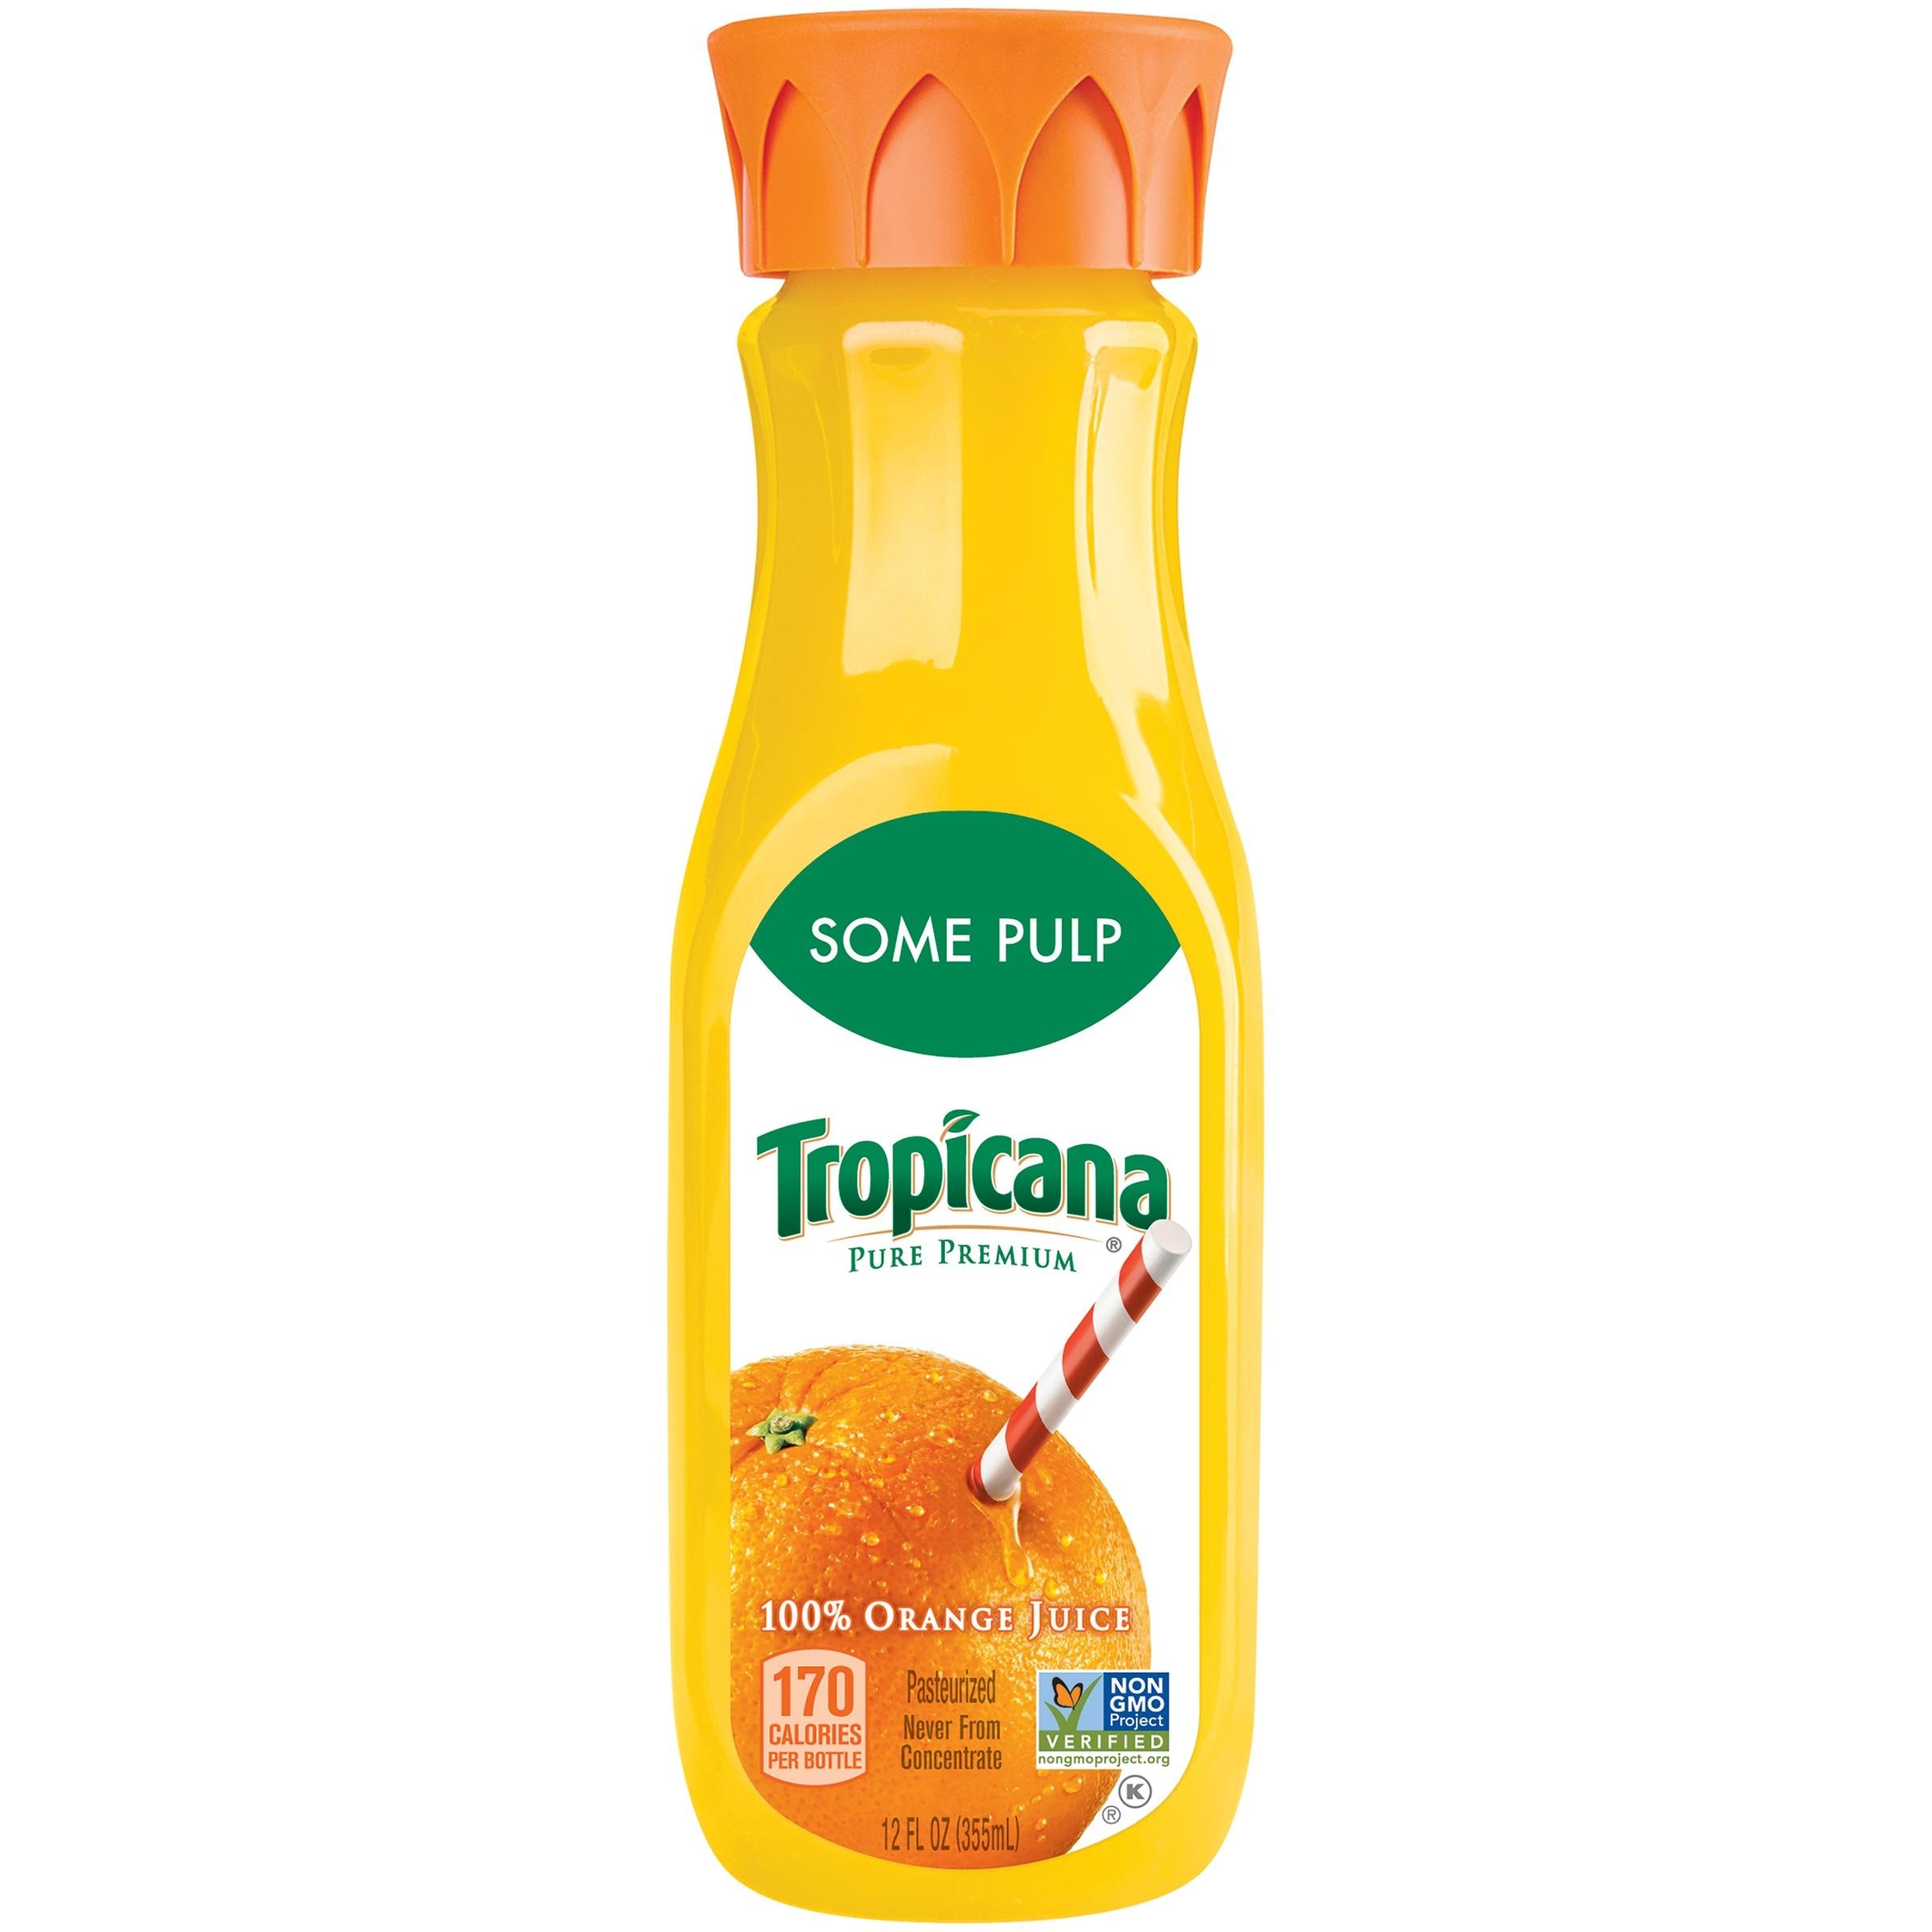 Tropicana Pure Premium  Some Pulp 100% Orange Juice  12 Oz Bottle